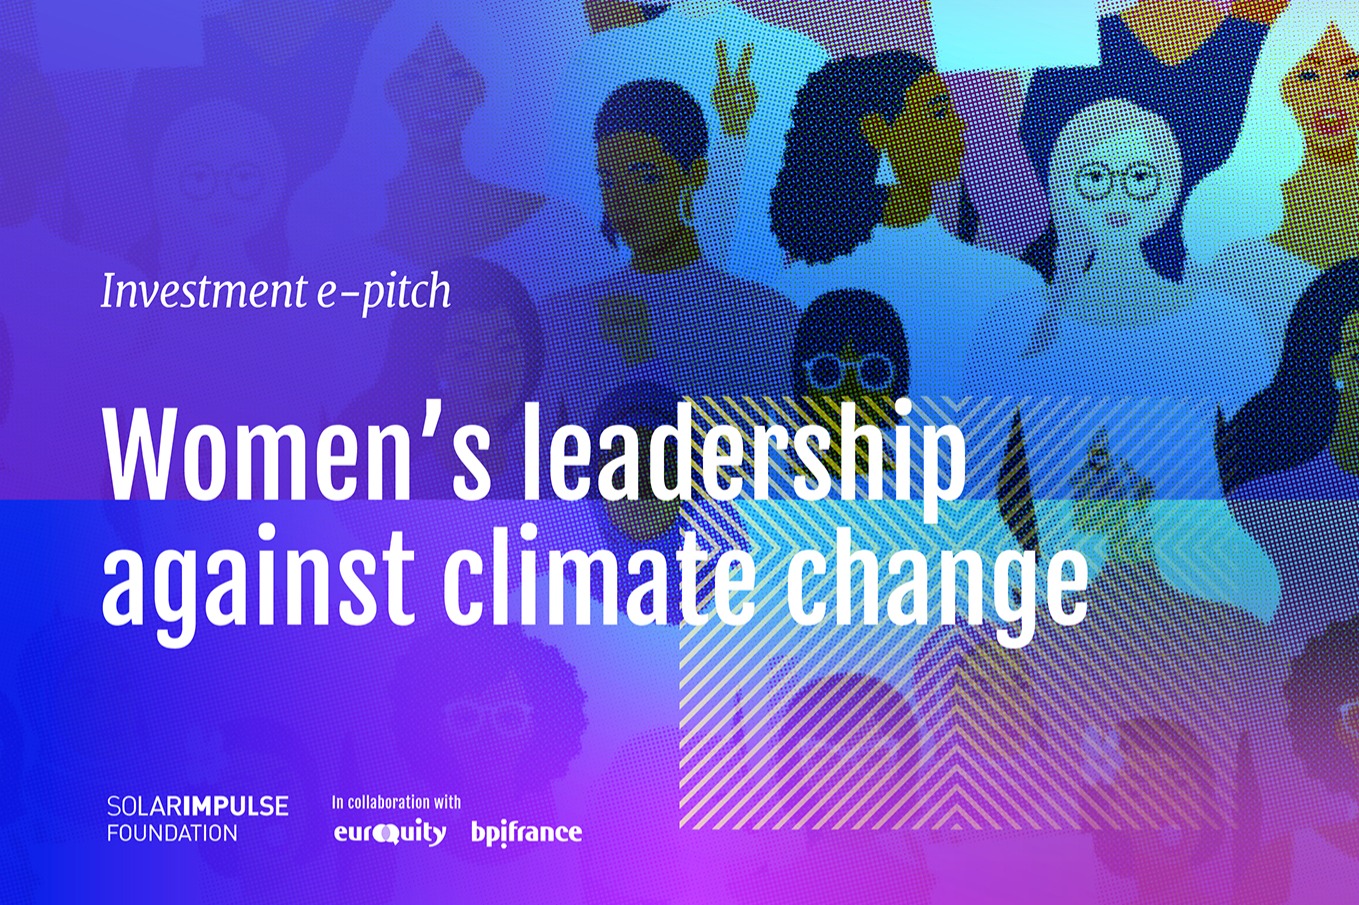 Women's leadership against climate change